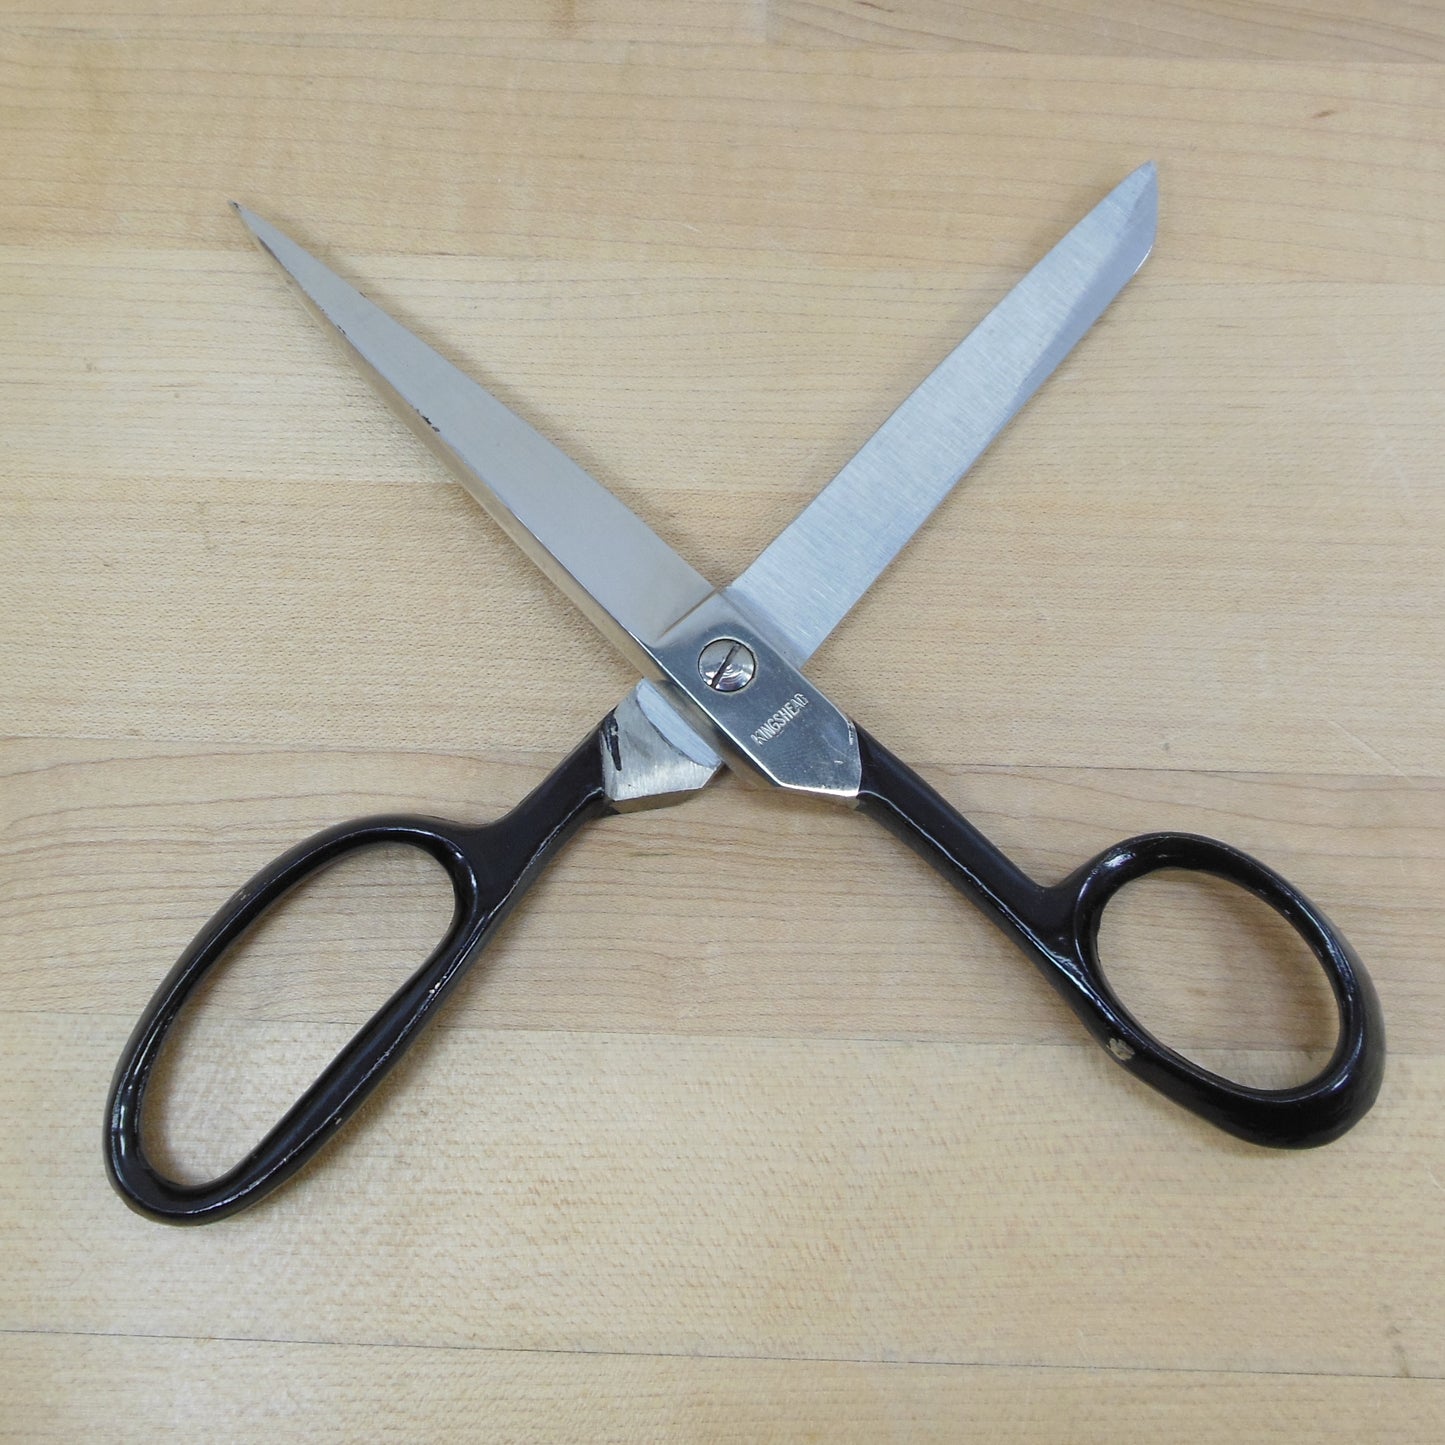 Kingshead Betakut Italy 9" Sewing Scissors Vintage